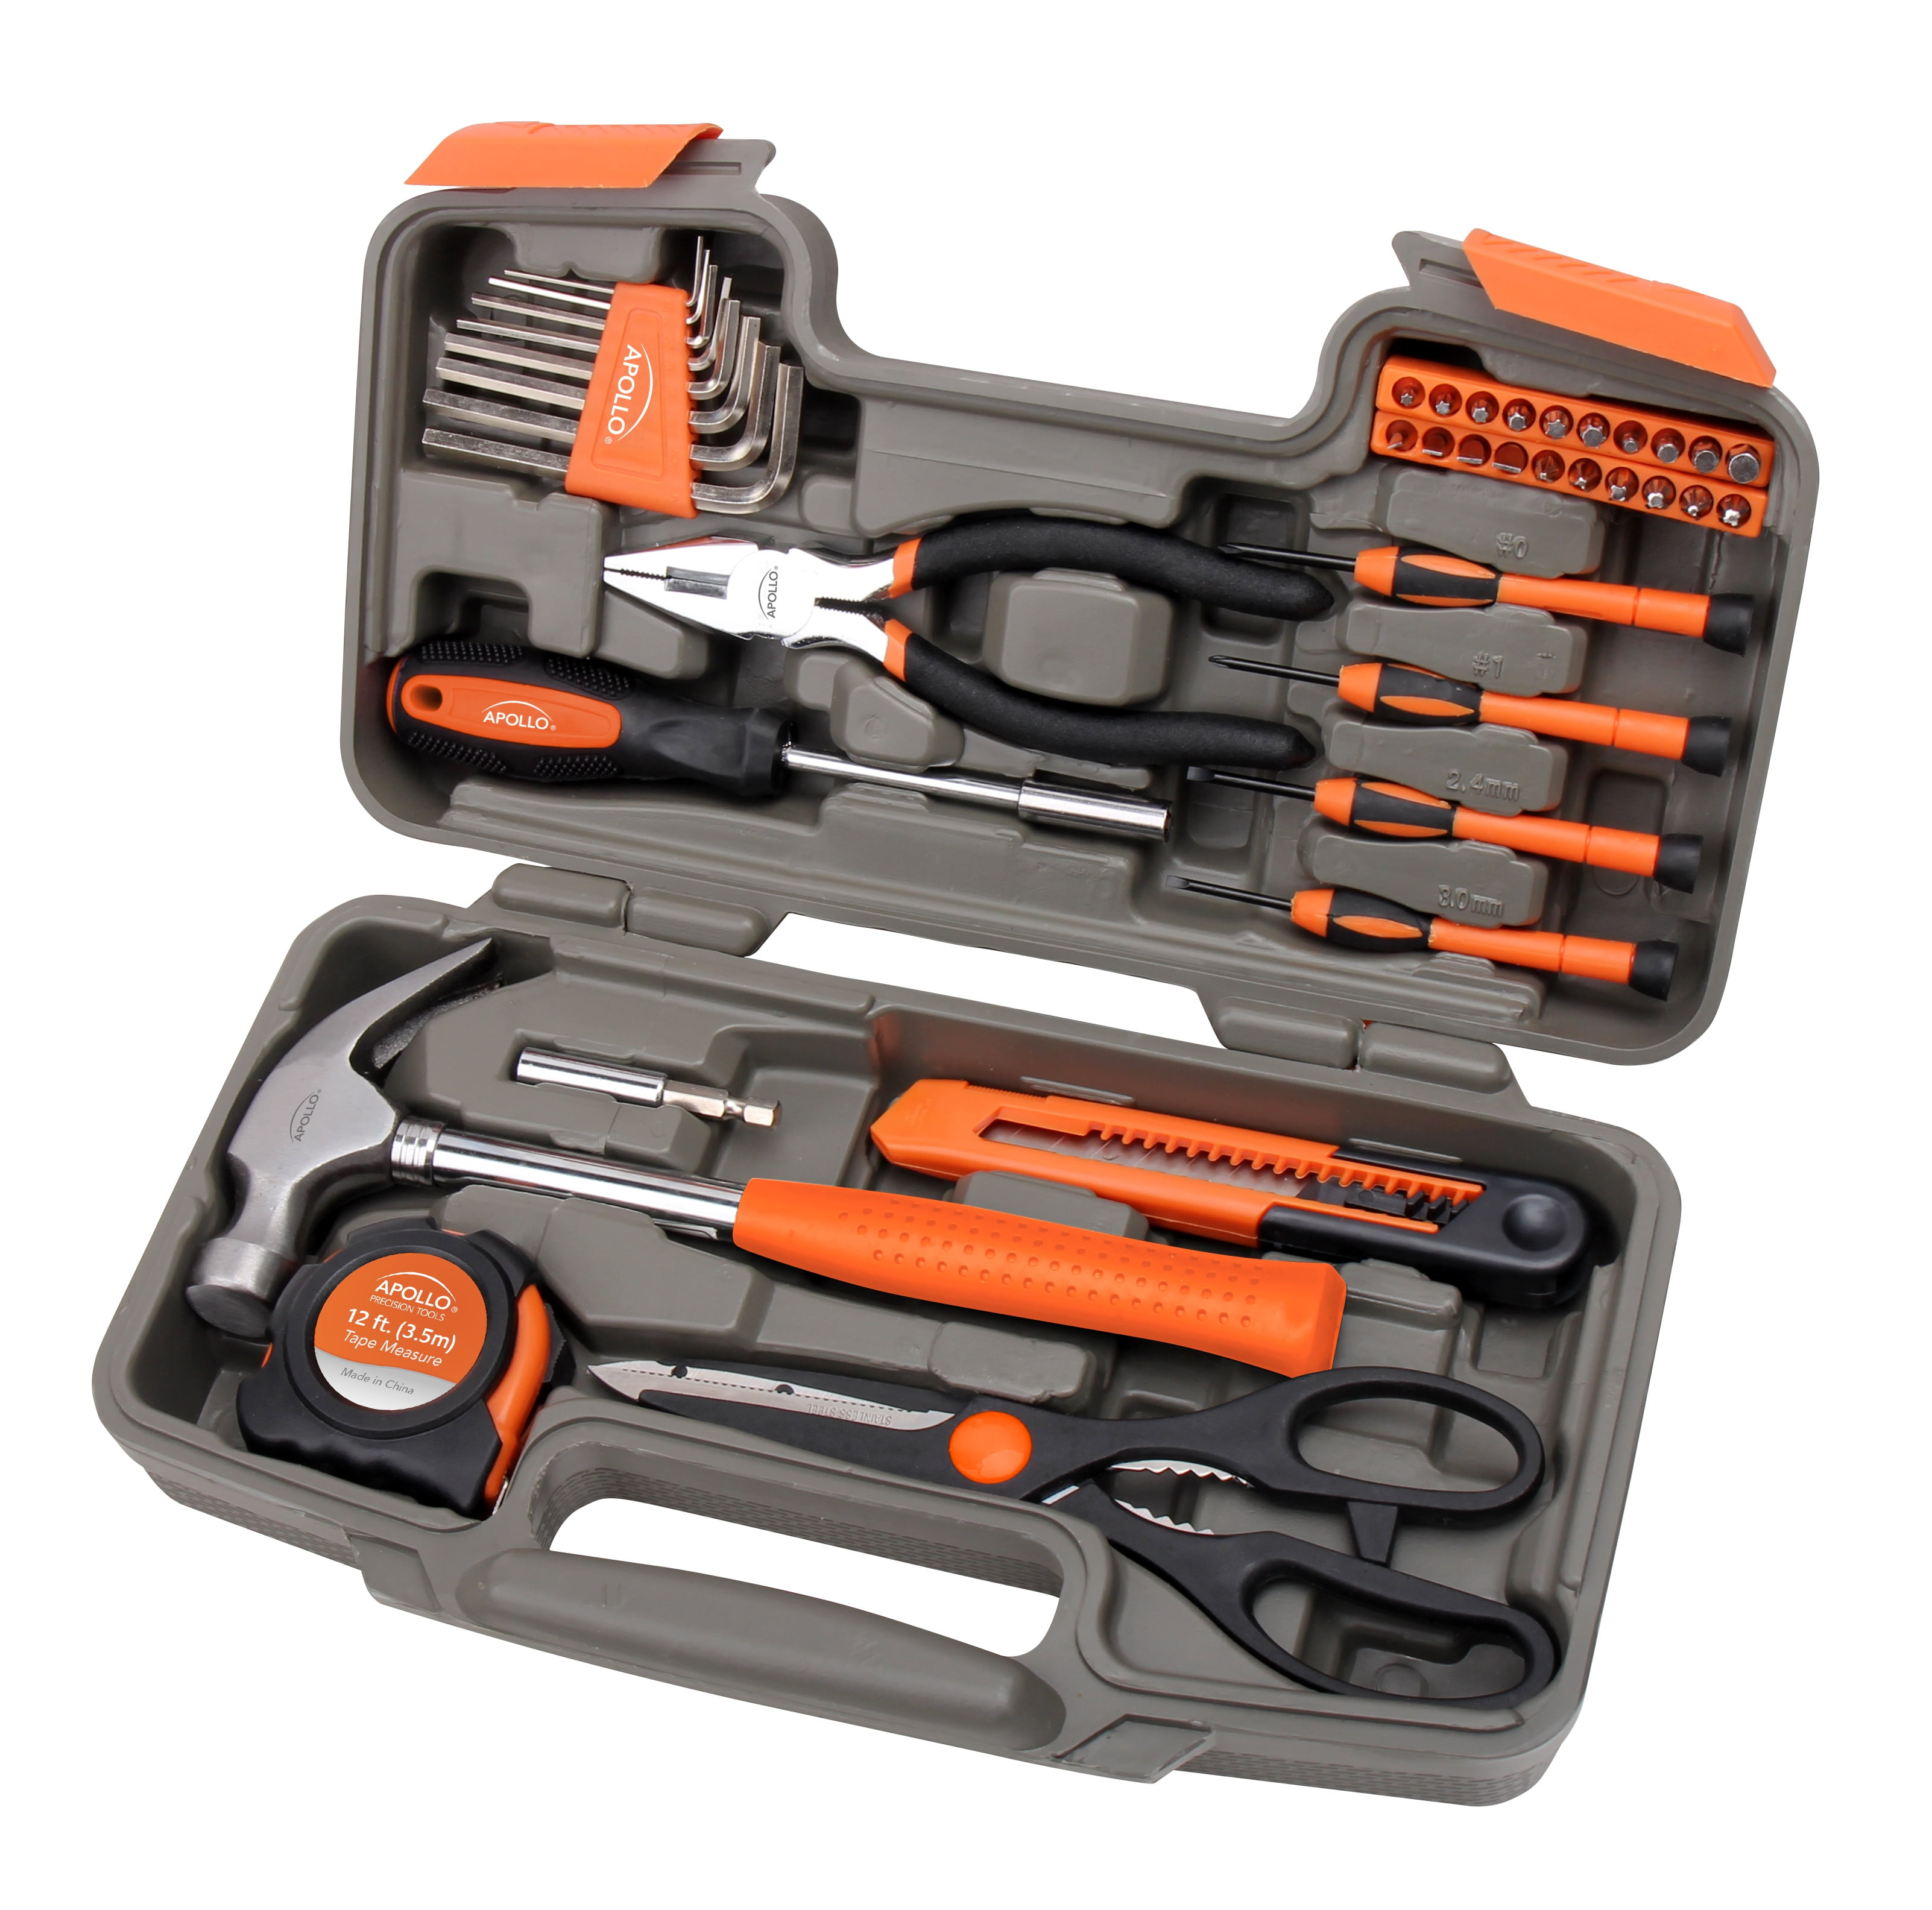 General Household Hand Tool Kit with orange Cartman Pink 39-Piece Tool Set 